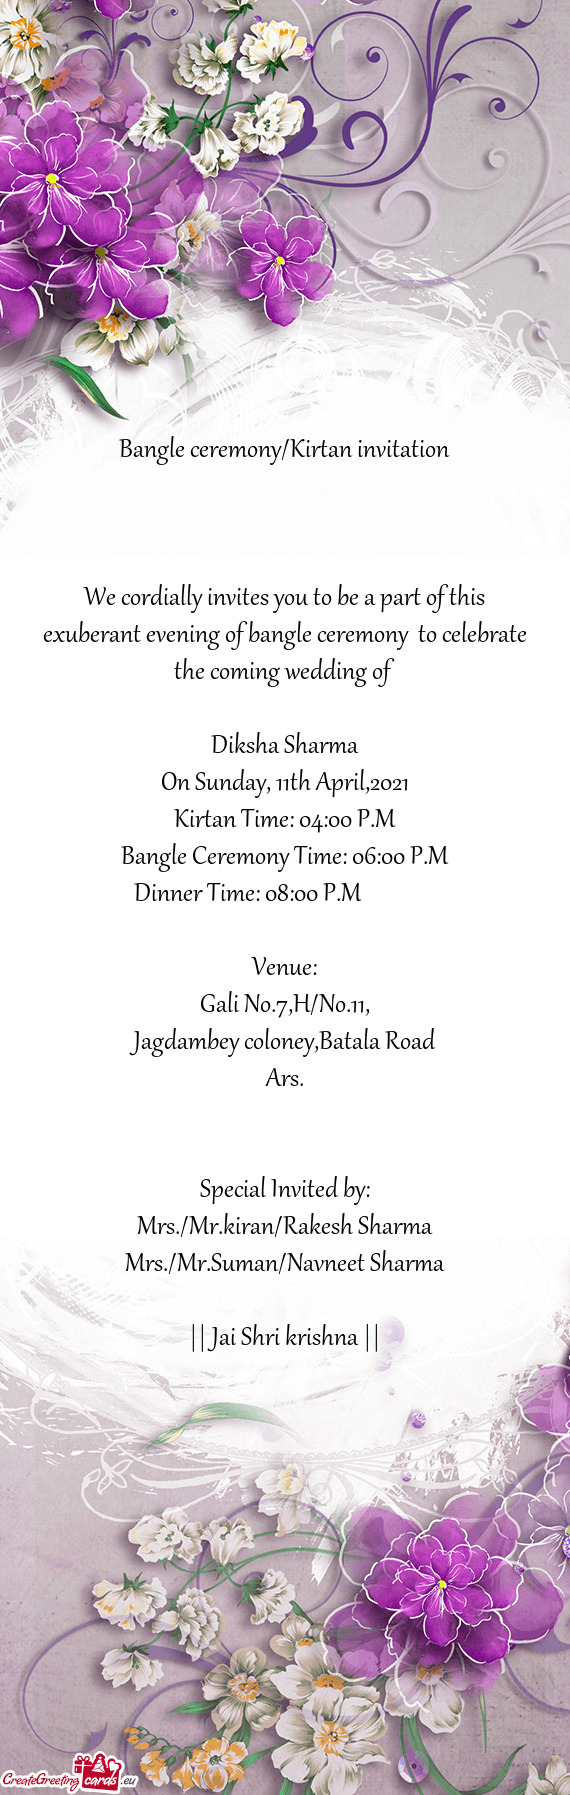 Bangle Ceremony Time: 06:00 P.M